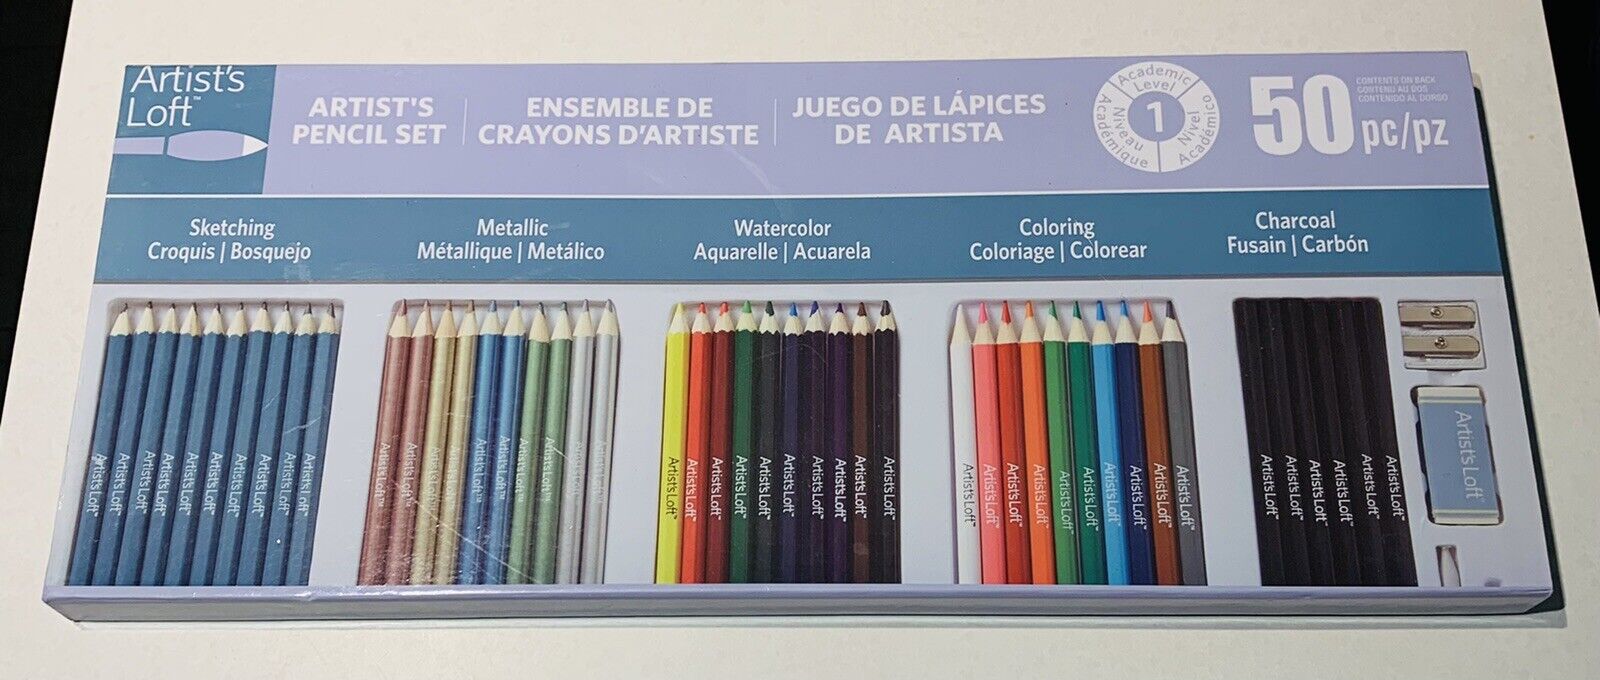  Artist's Loft Colored Pencils, 12 Count : Arts